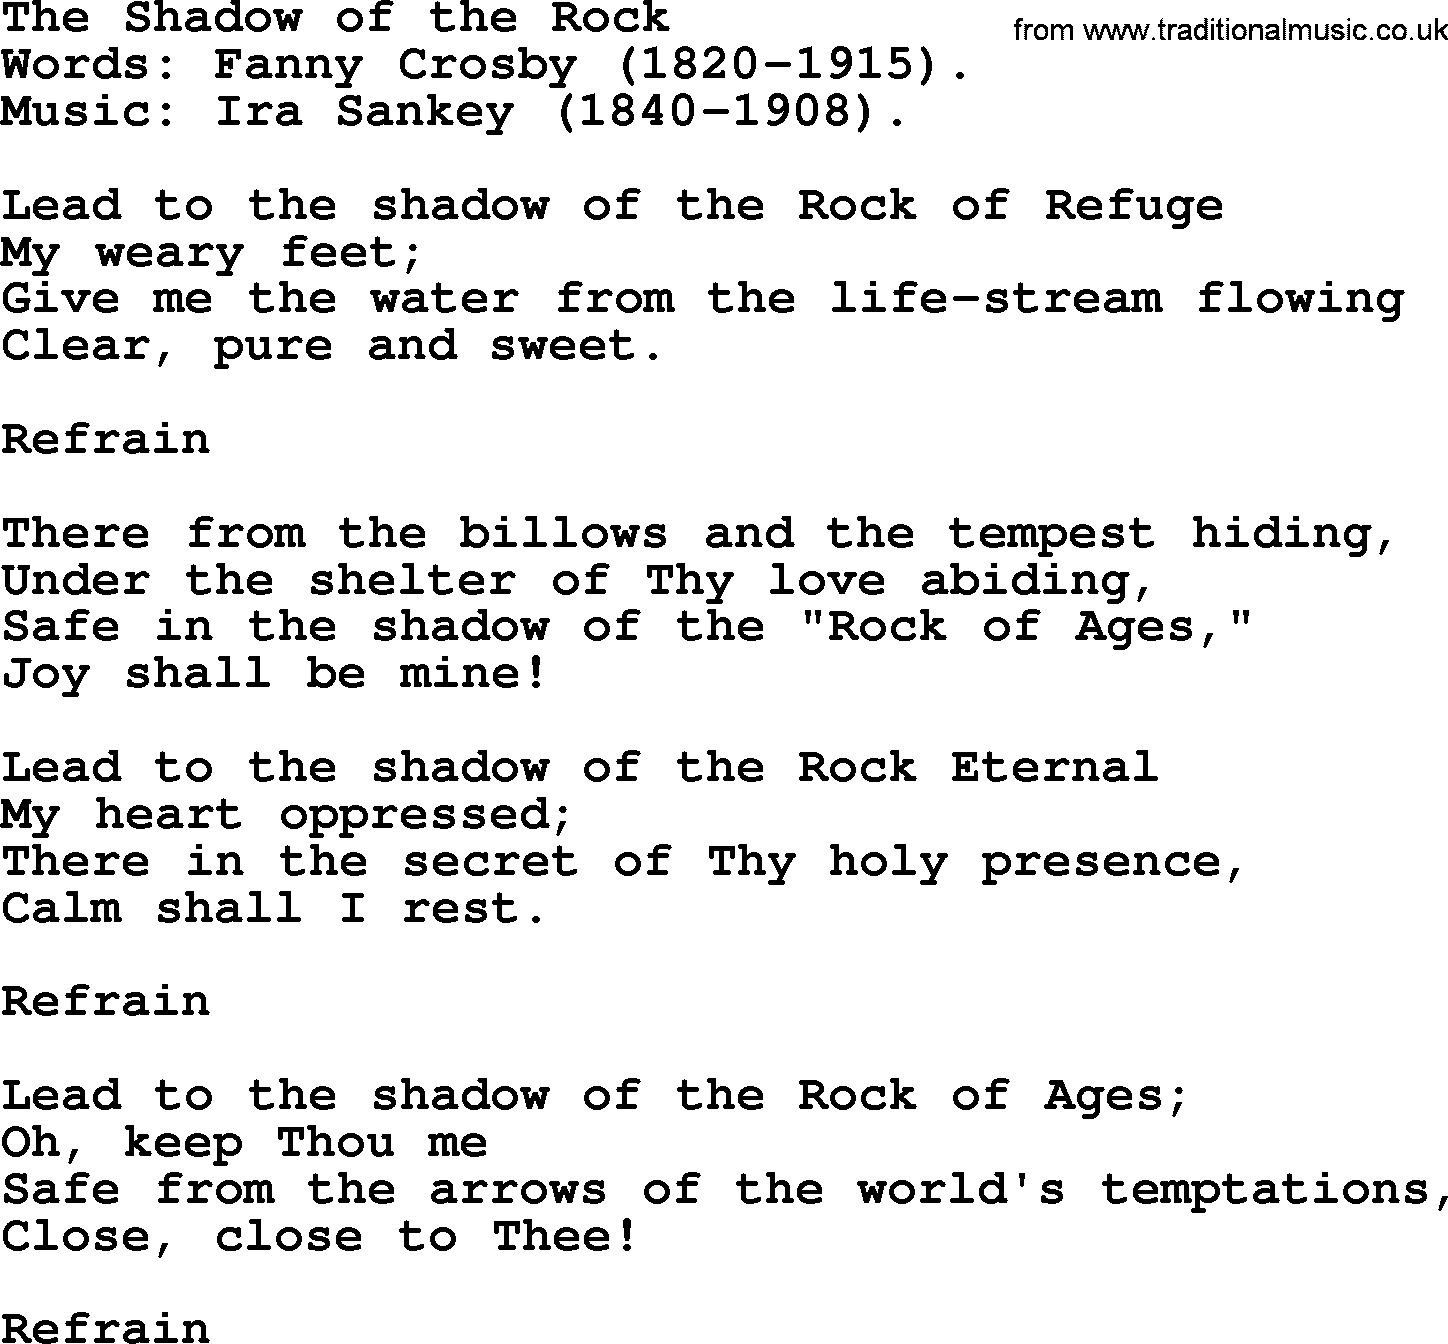 Ira Sankey hymn: The Shadow of the Rock-Ira Sankey, lyrics